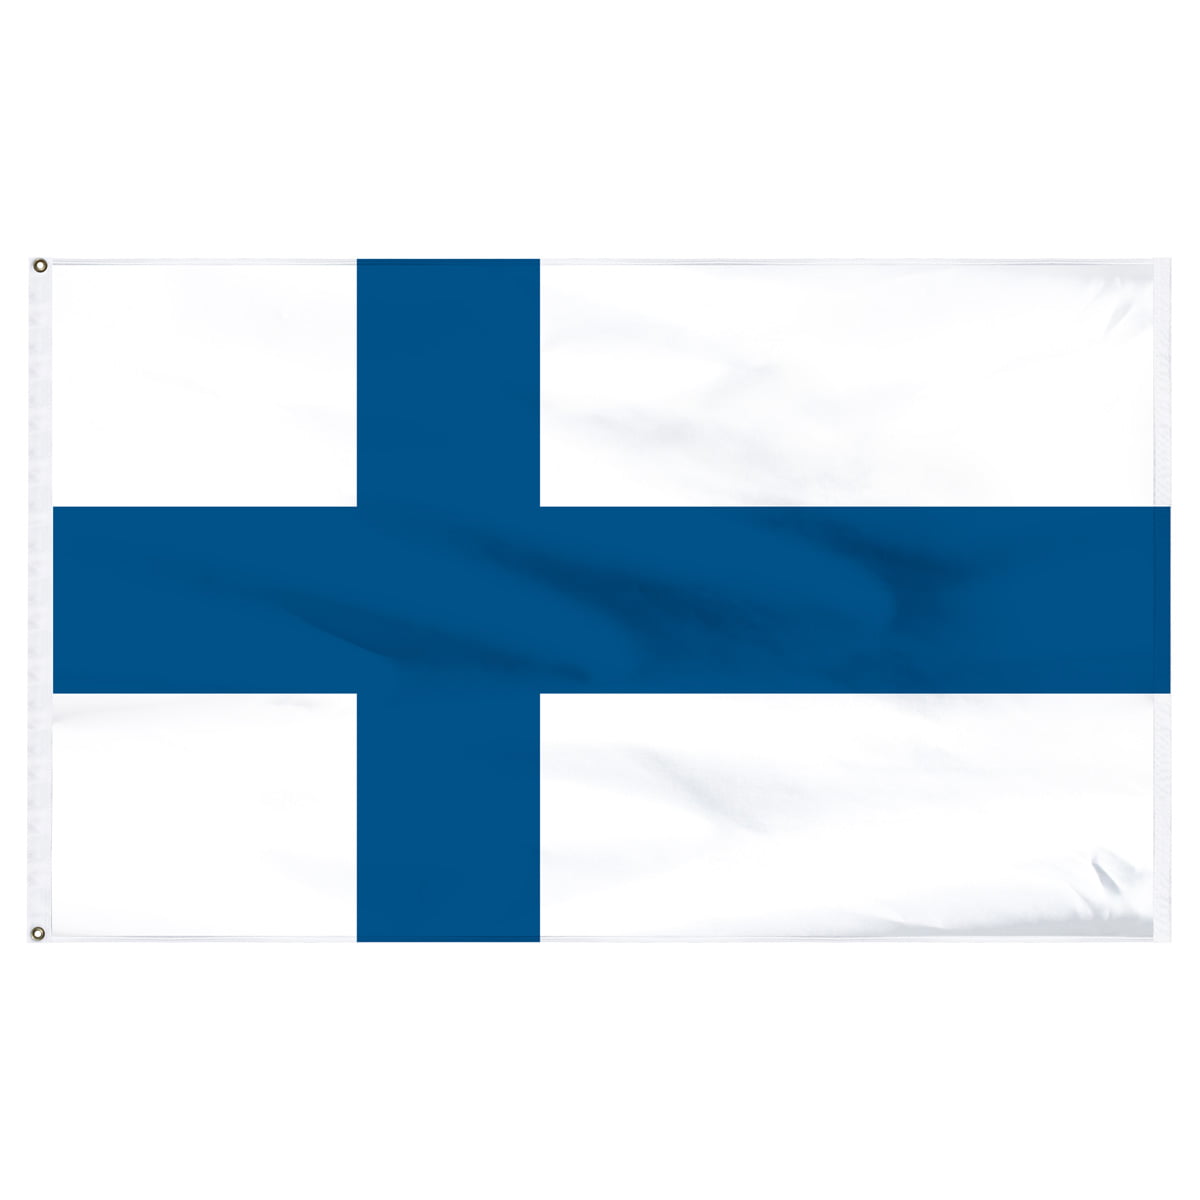 Sweden Flag With Grommets 2Ft X 3Ft